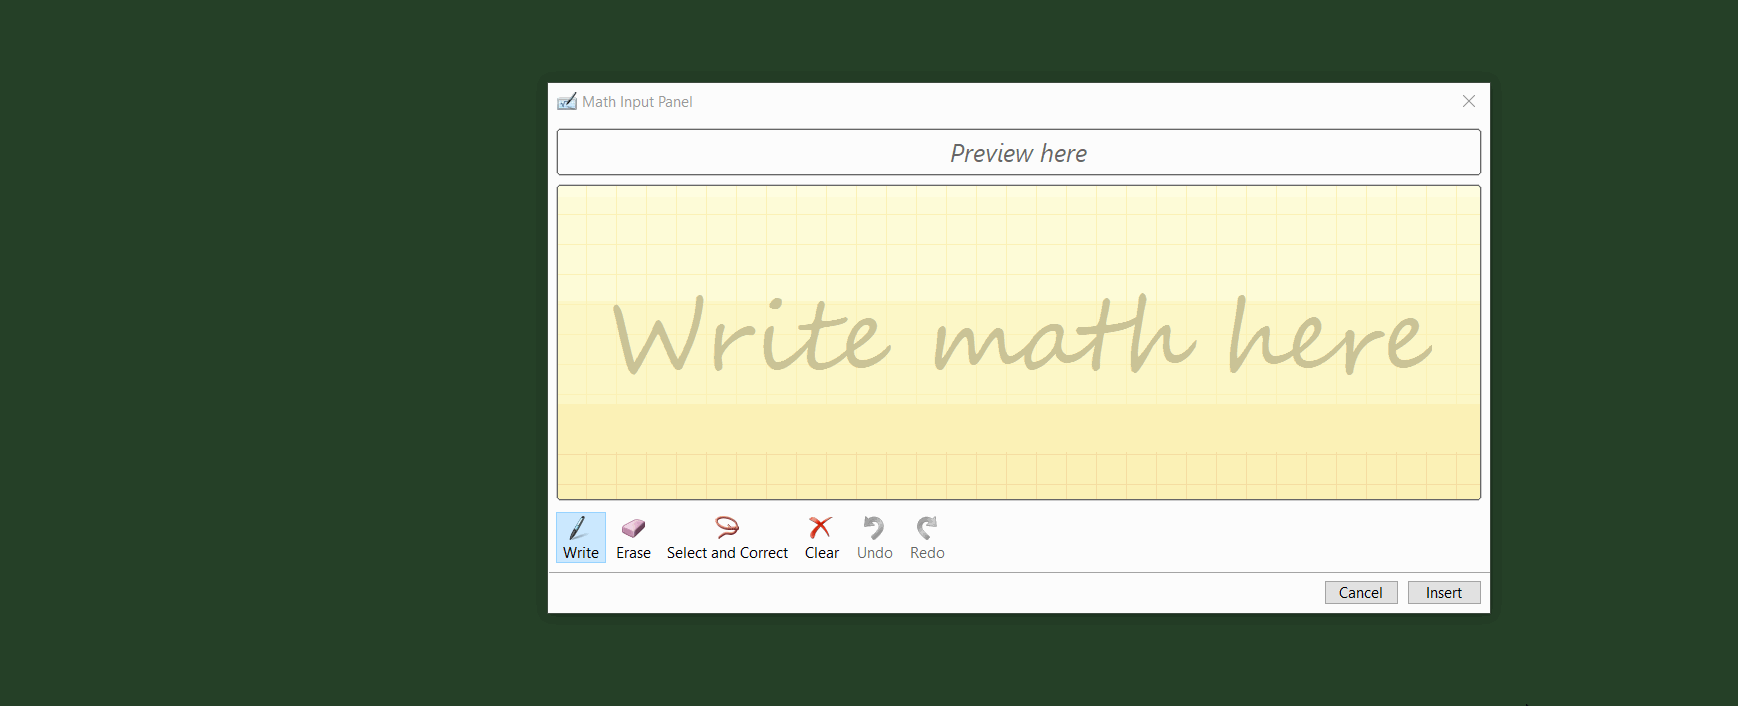 use math input panel